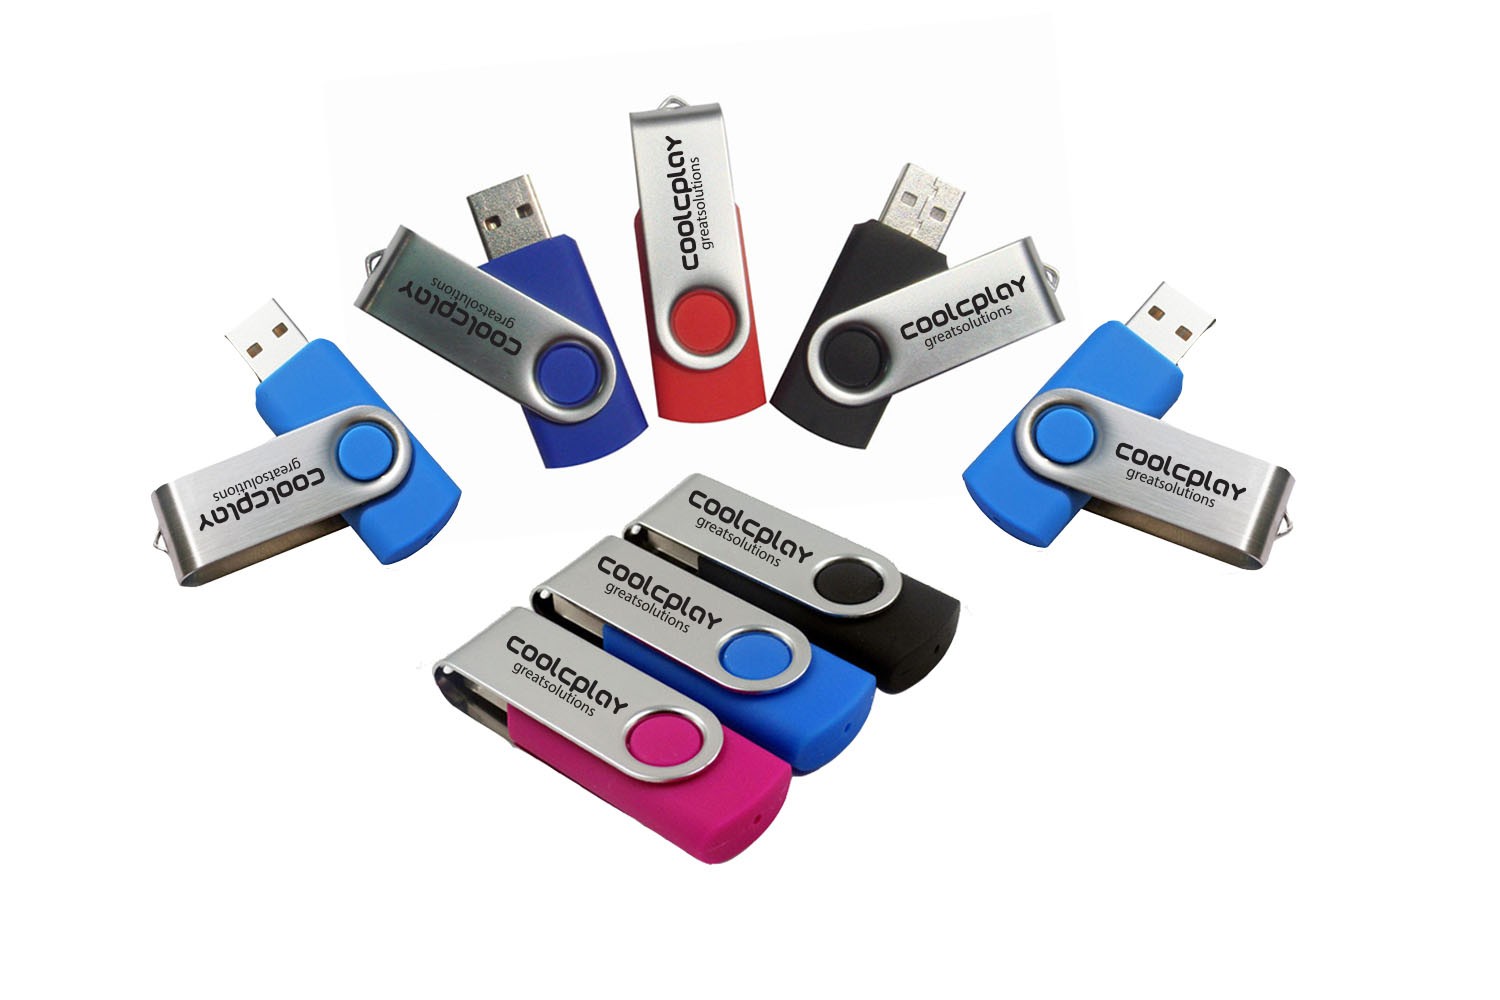 Colorful 1 GB USB Flashdrive With Swivel Cap